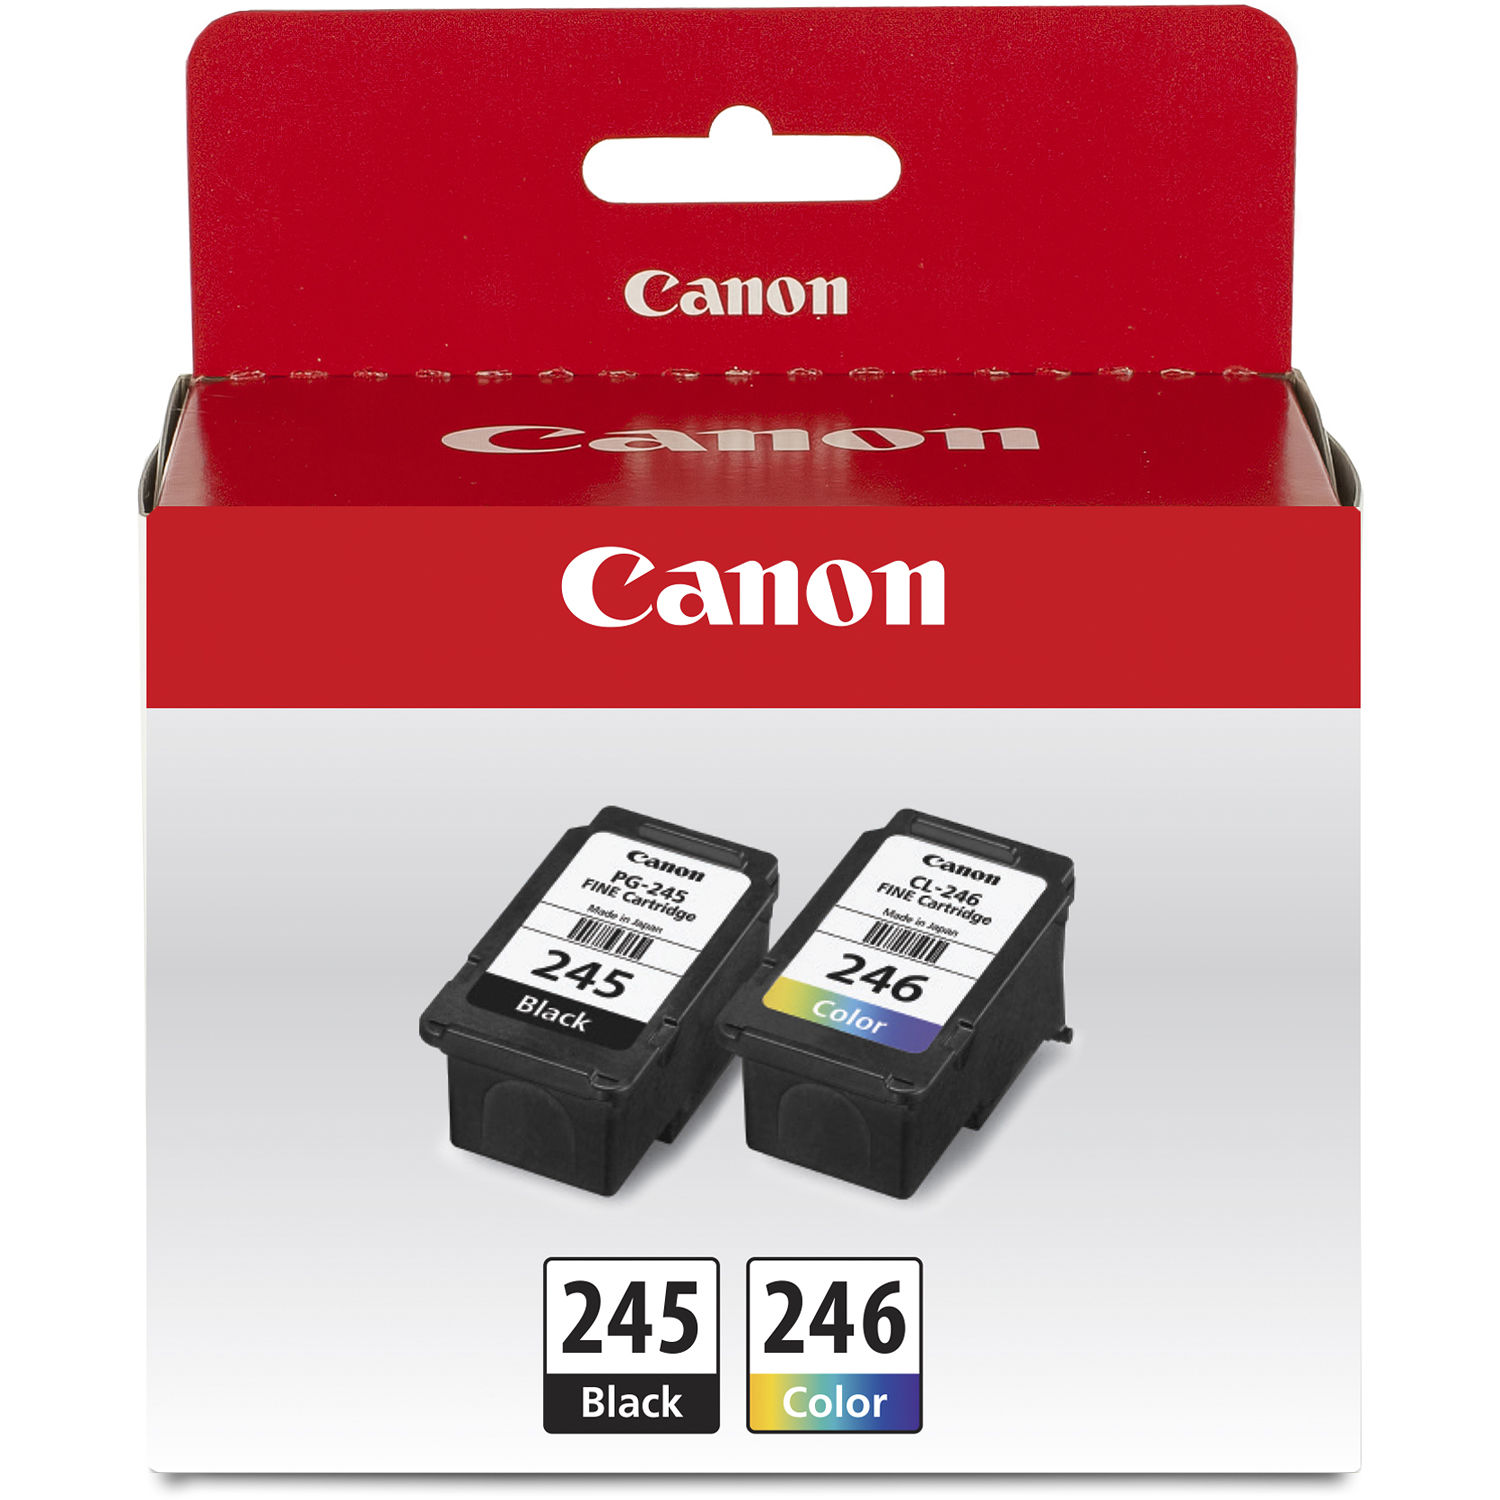 Value Pack Canon Pg 245 Cl 246 para Impresoras Pixma Mx492 y Tr4520 de Canon